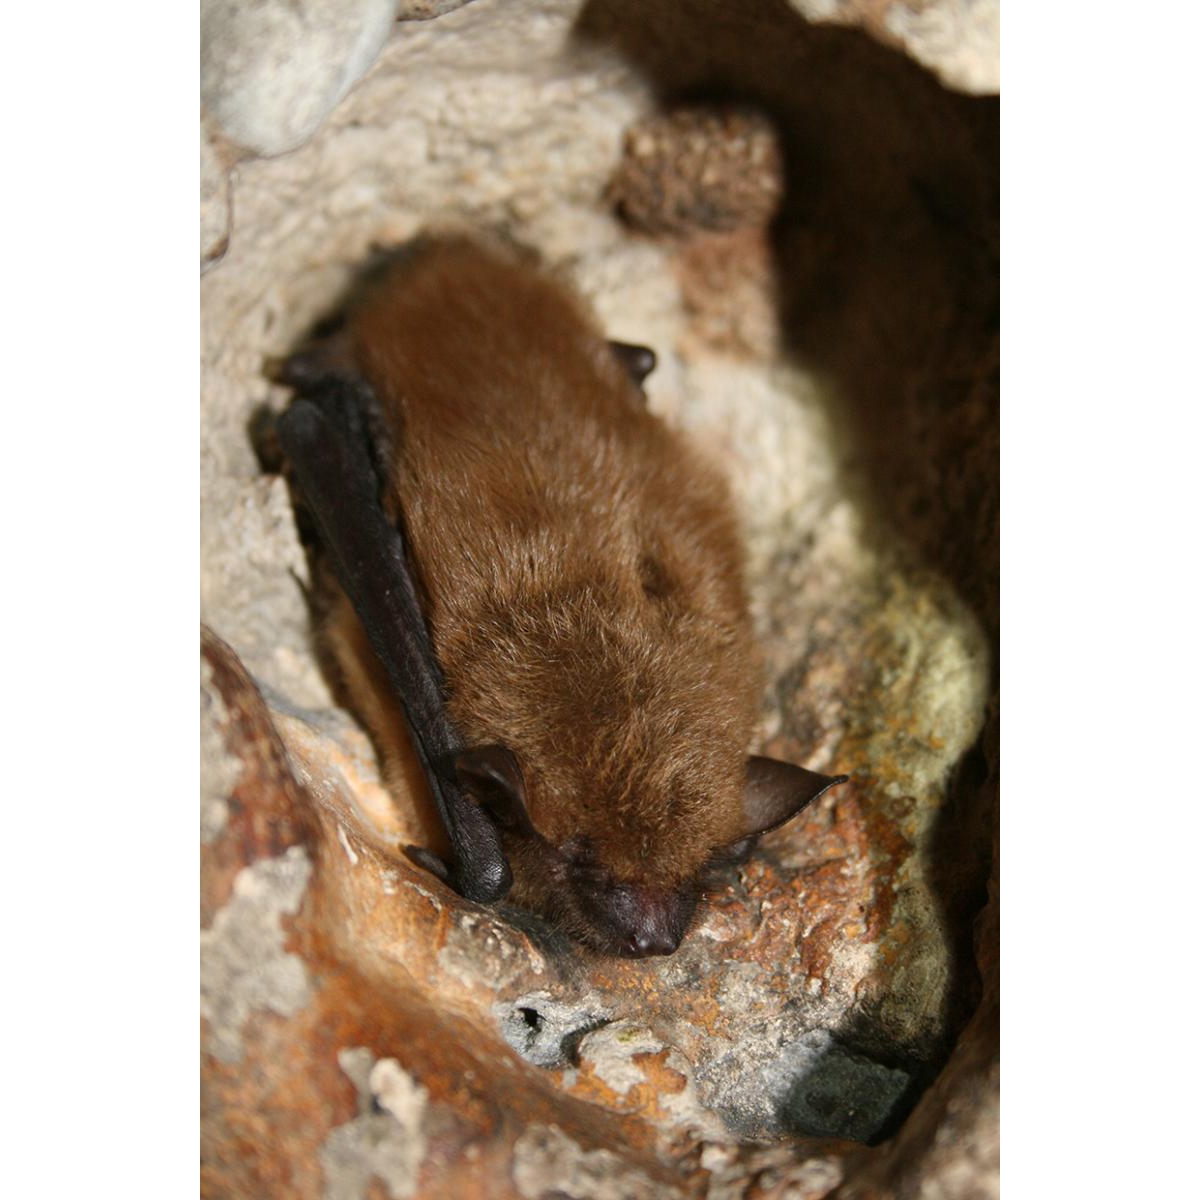 Bats and Bat Exclusion